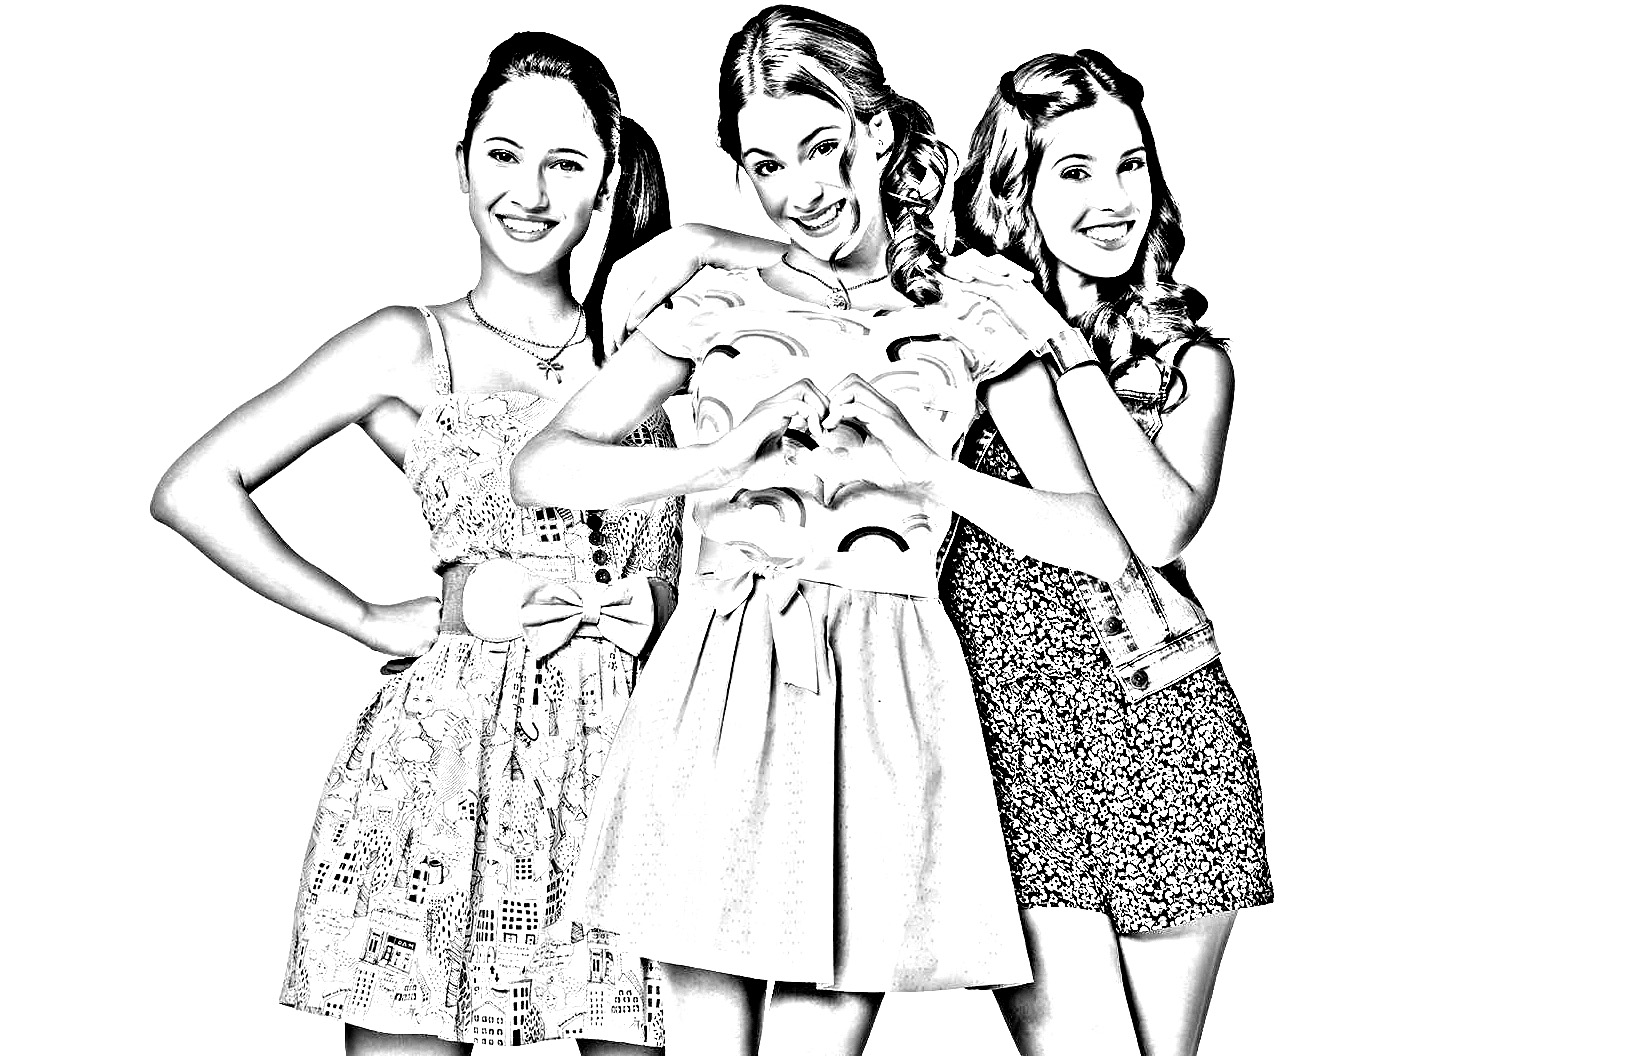 Les héroïnes de la série latina phare de Disney : Francesca, Camilla et bien sûr Violetta